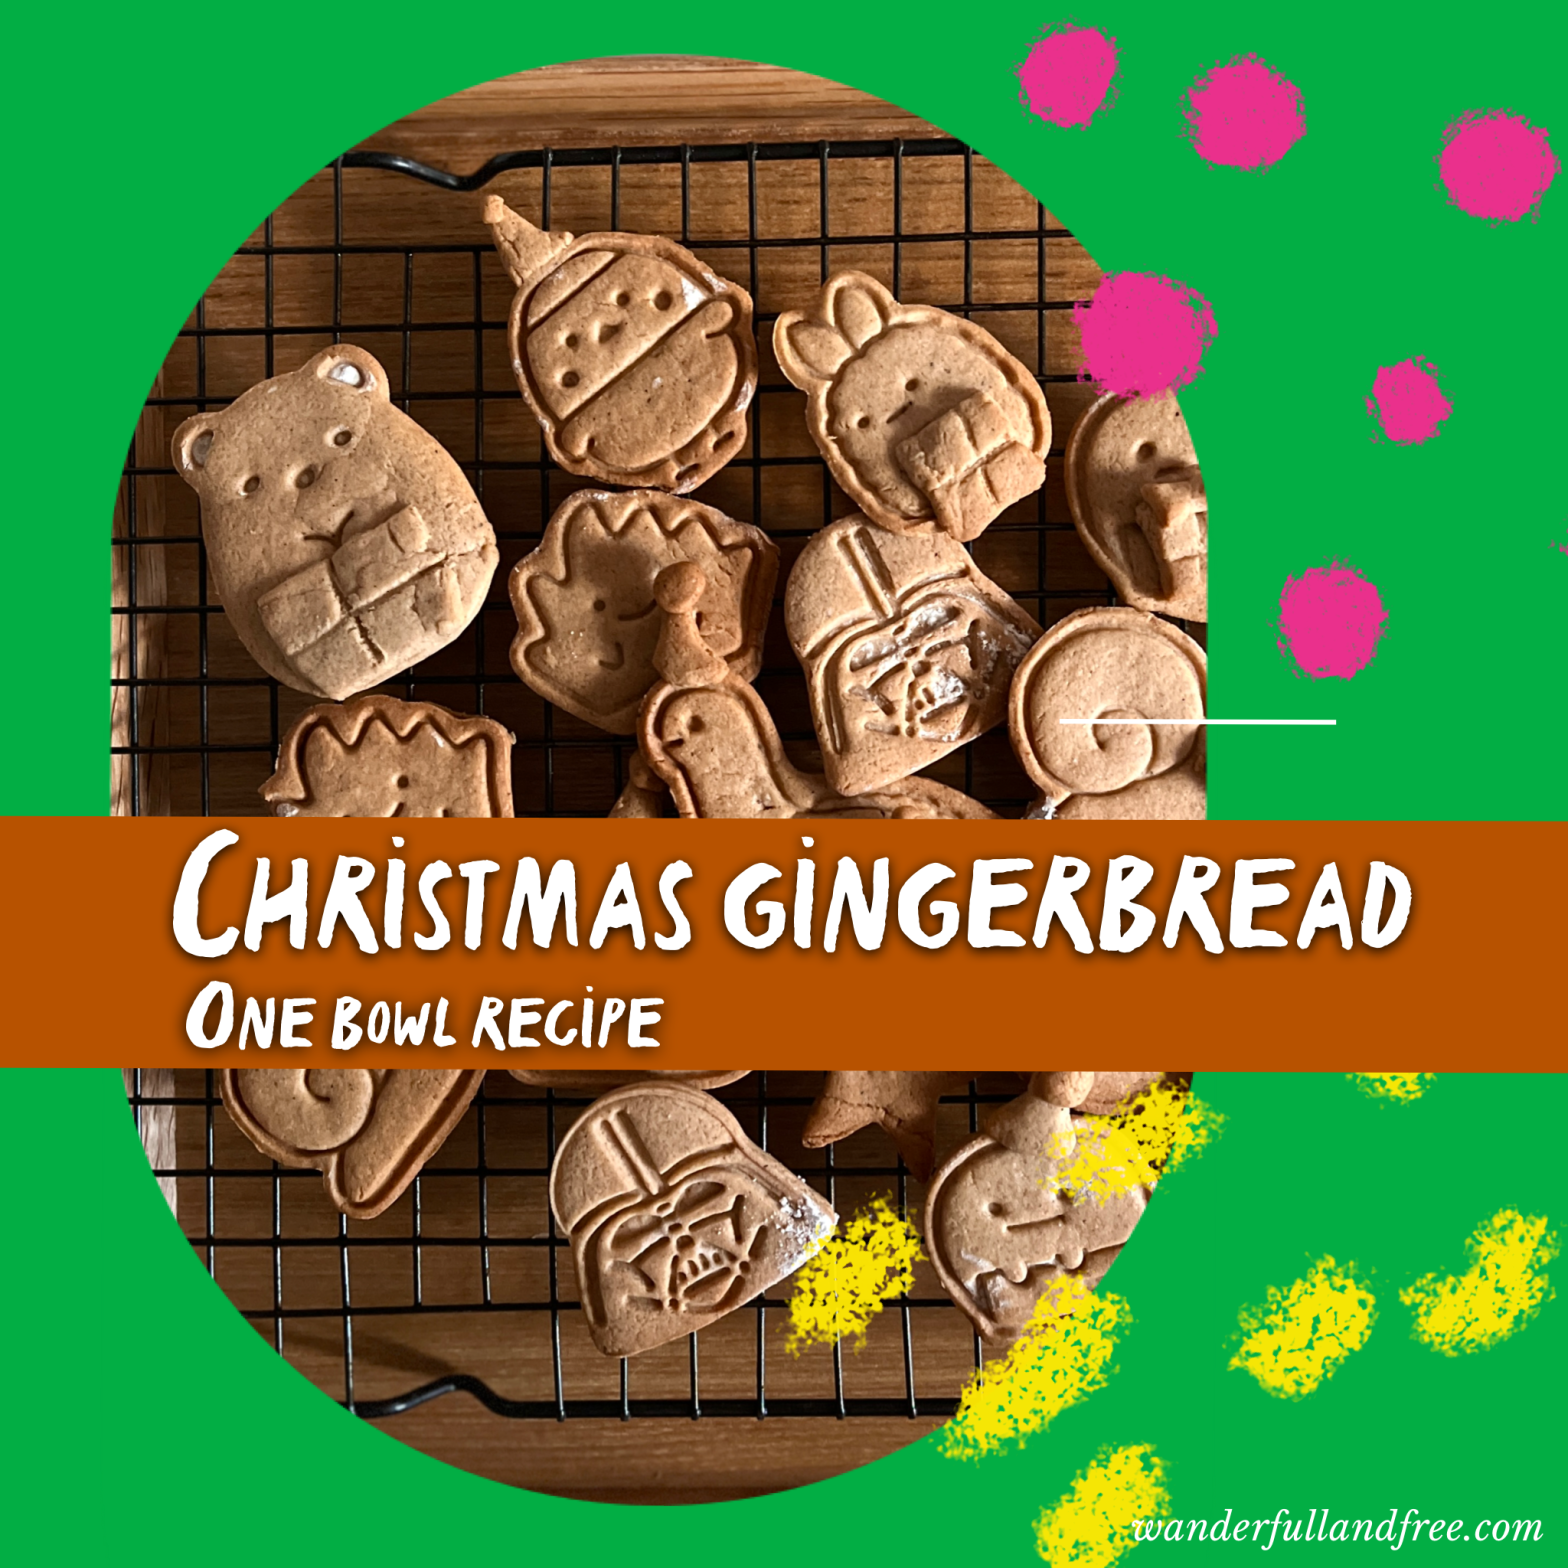 Christmas gingerbread recipe one bowl recipe Sumikko Star Wars